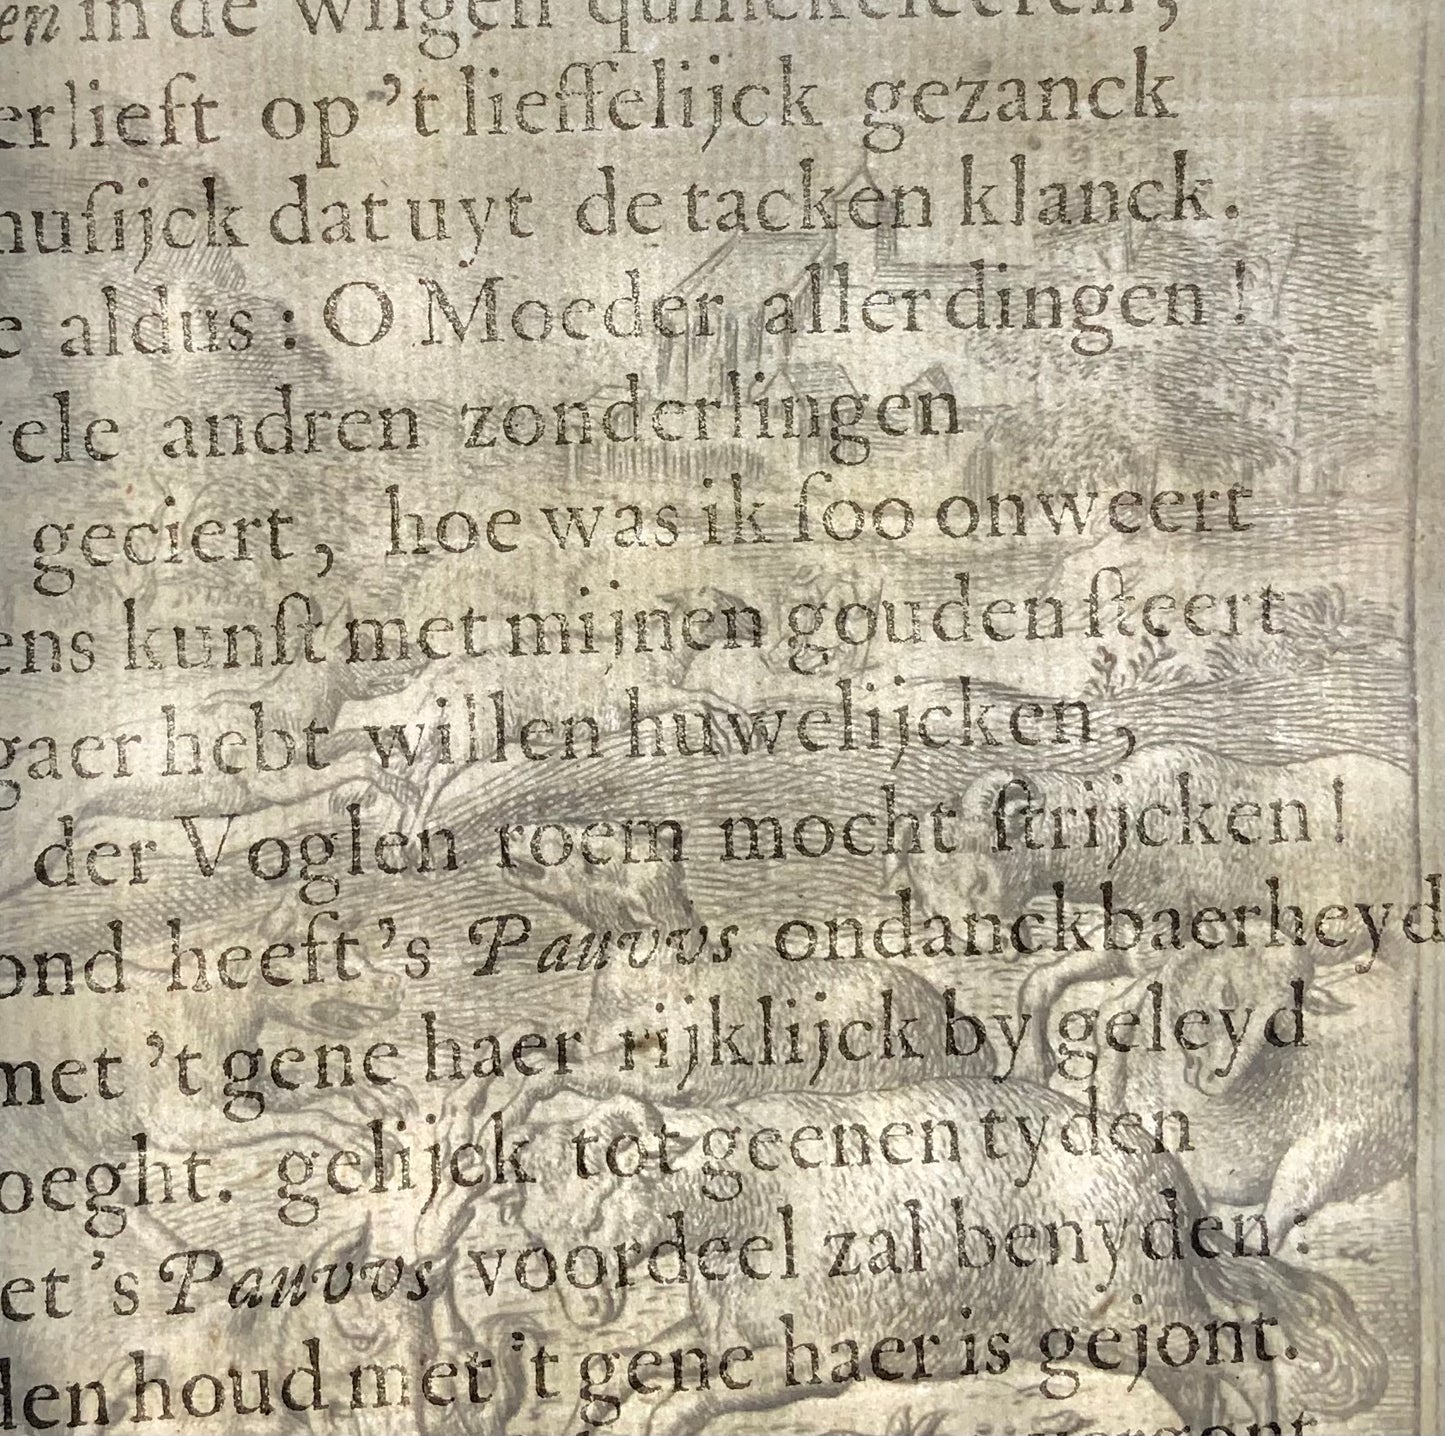 1617 Gheeraerts, incisione magistrale, Esopo: i lupi e le pecore, favola